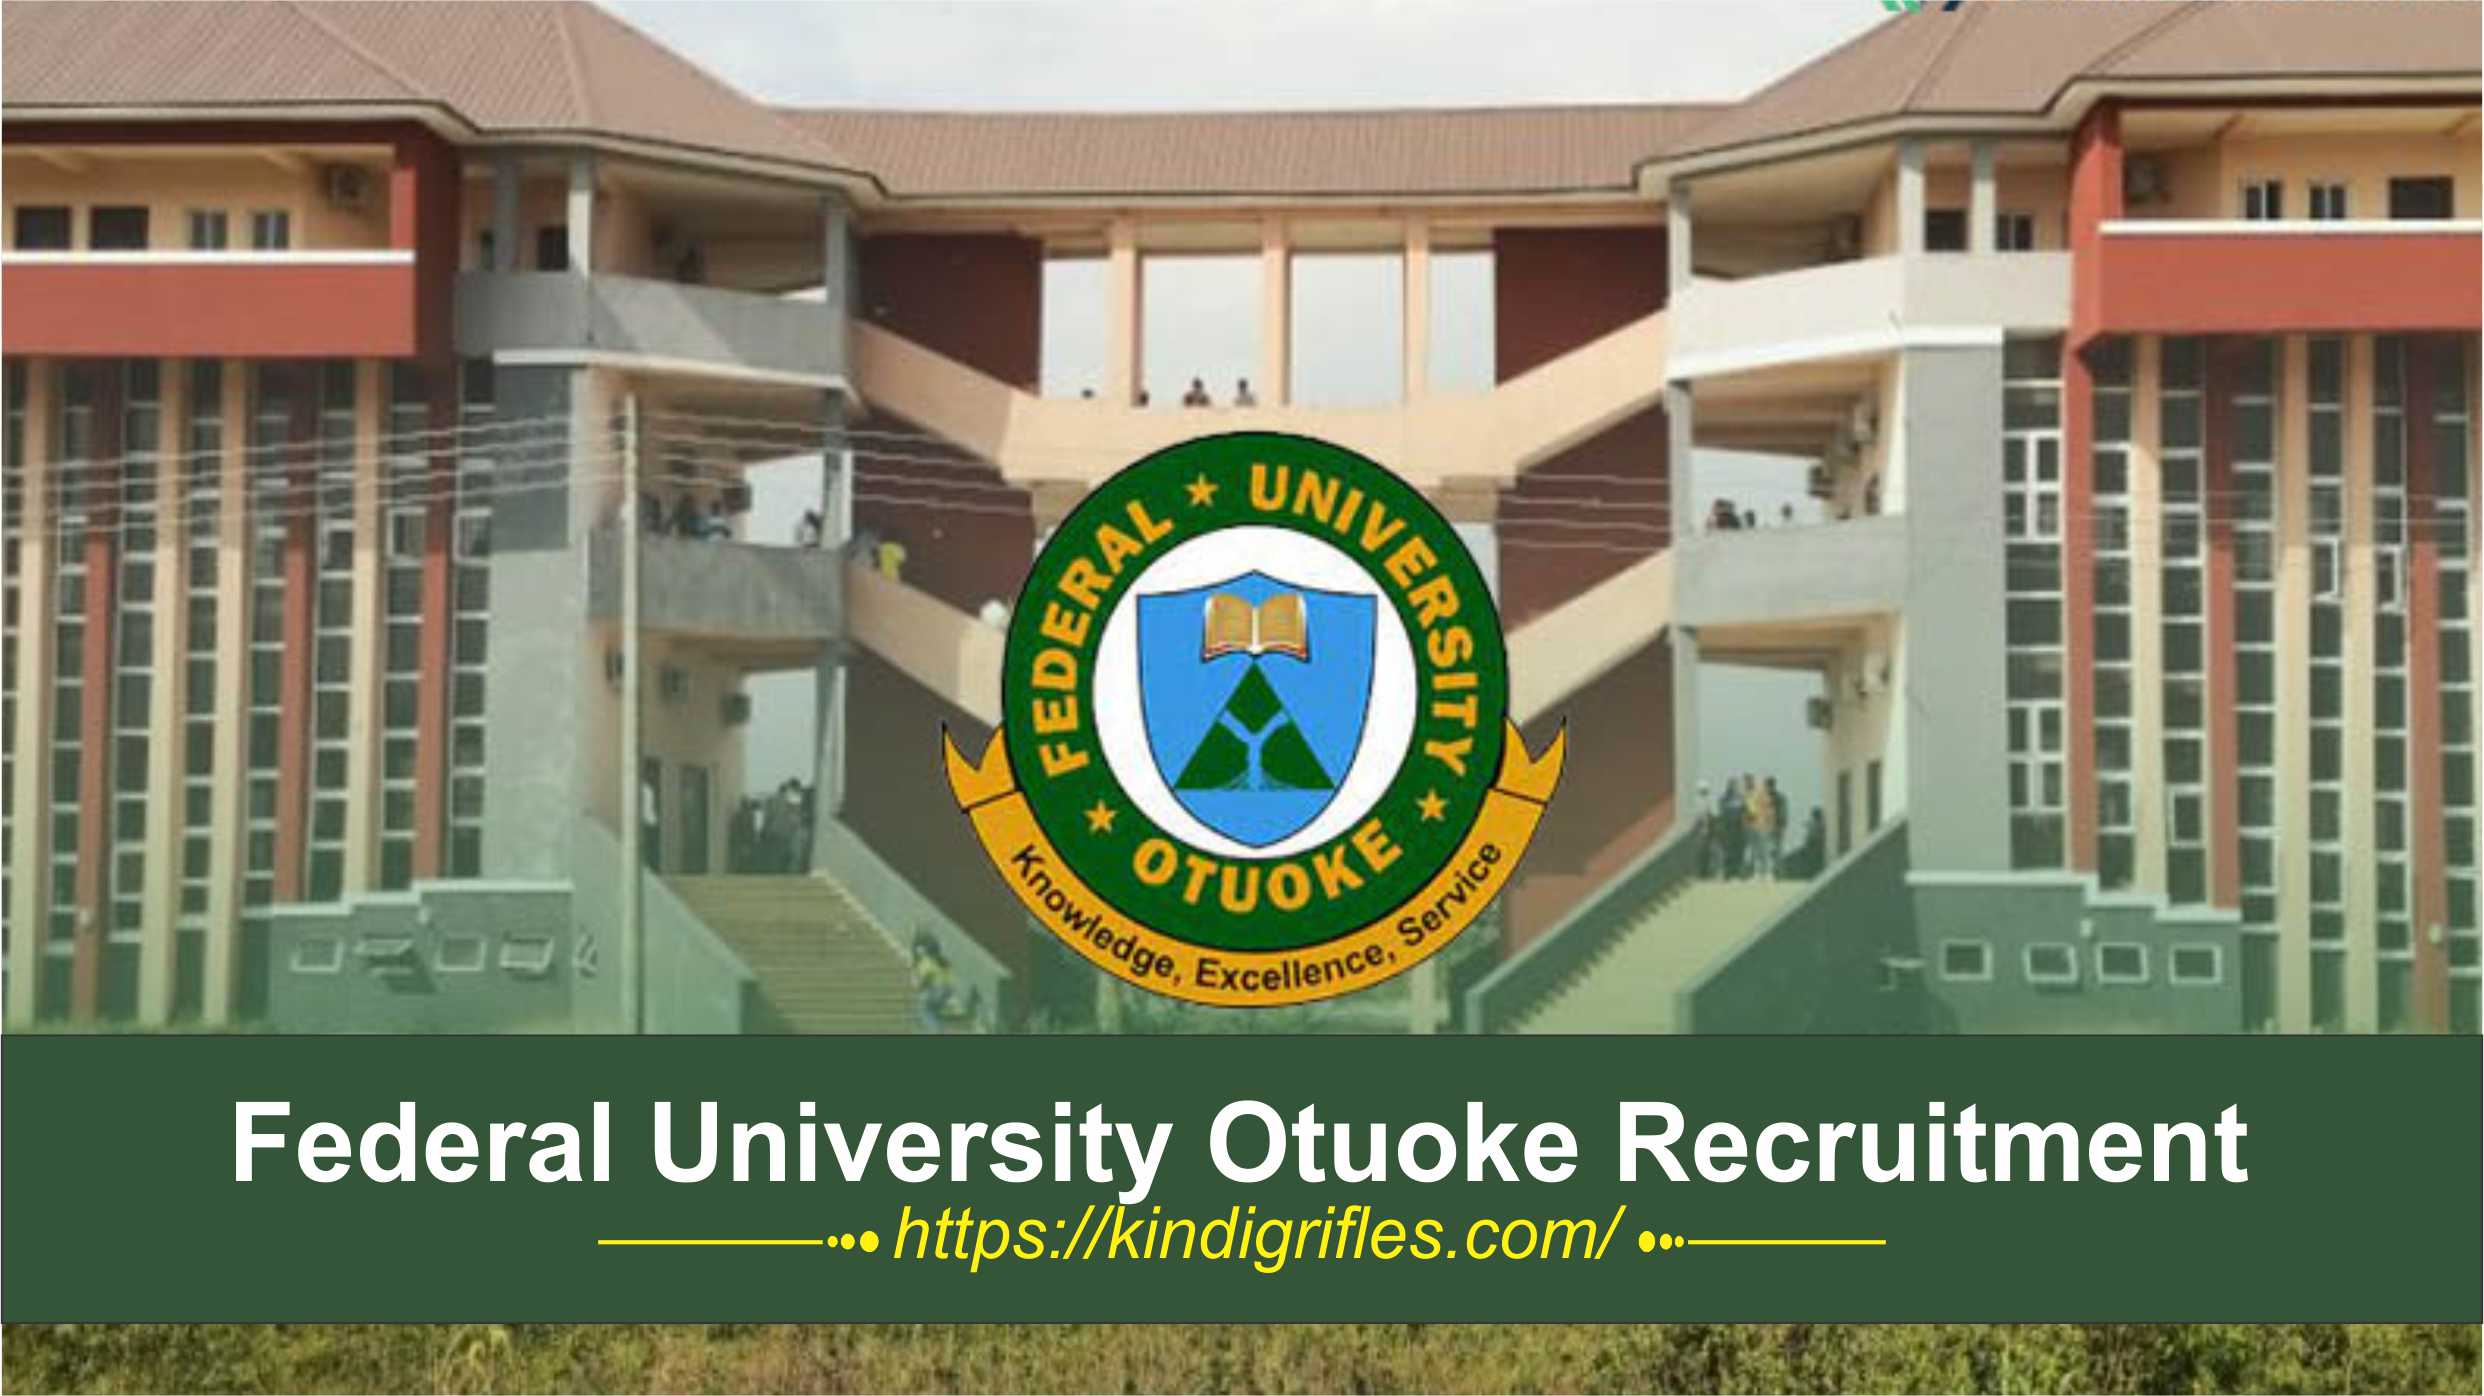 Federal University Otuoke Recruitment